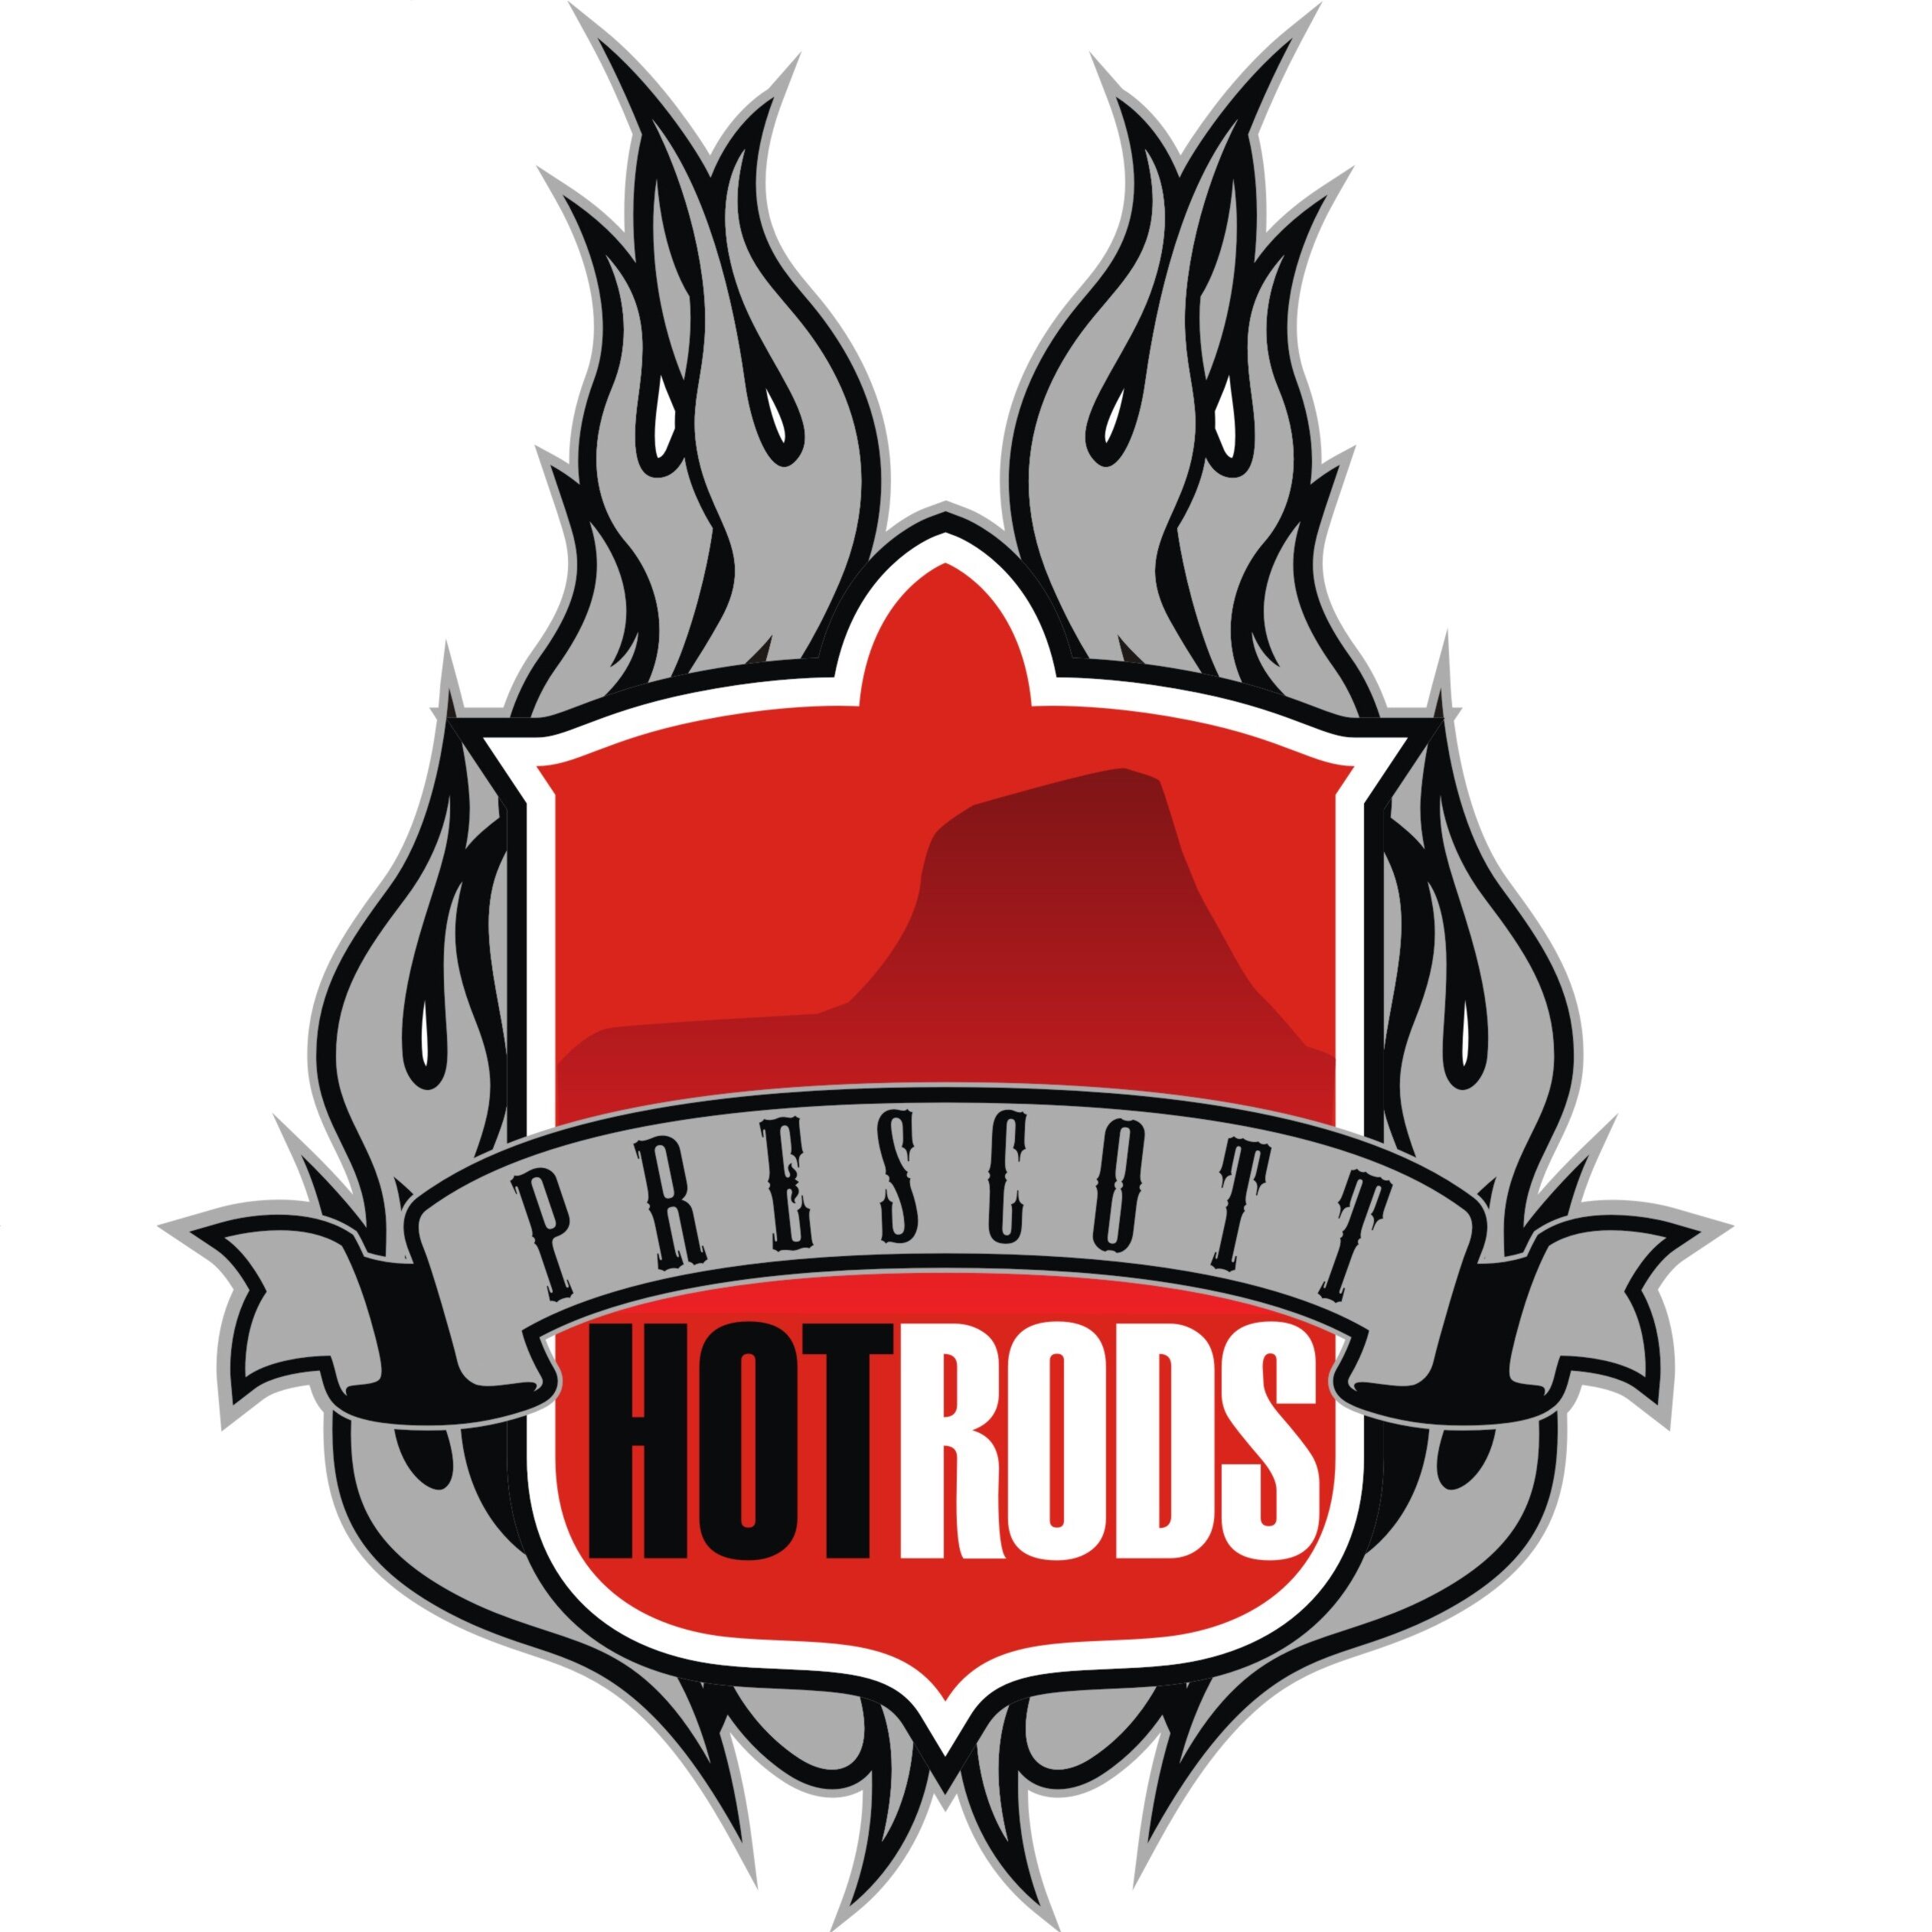 Prescott Hot Rods flame logo